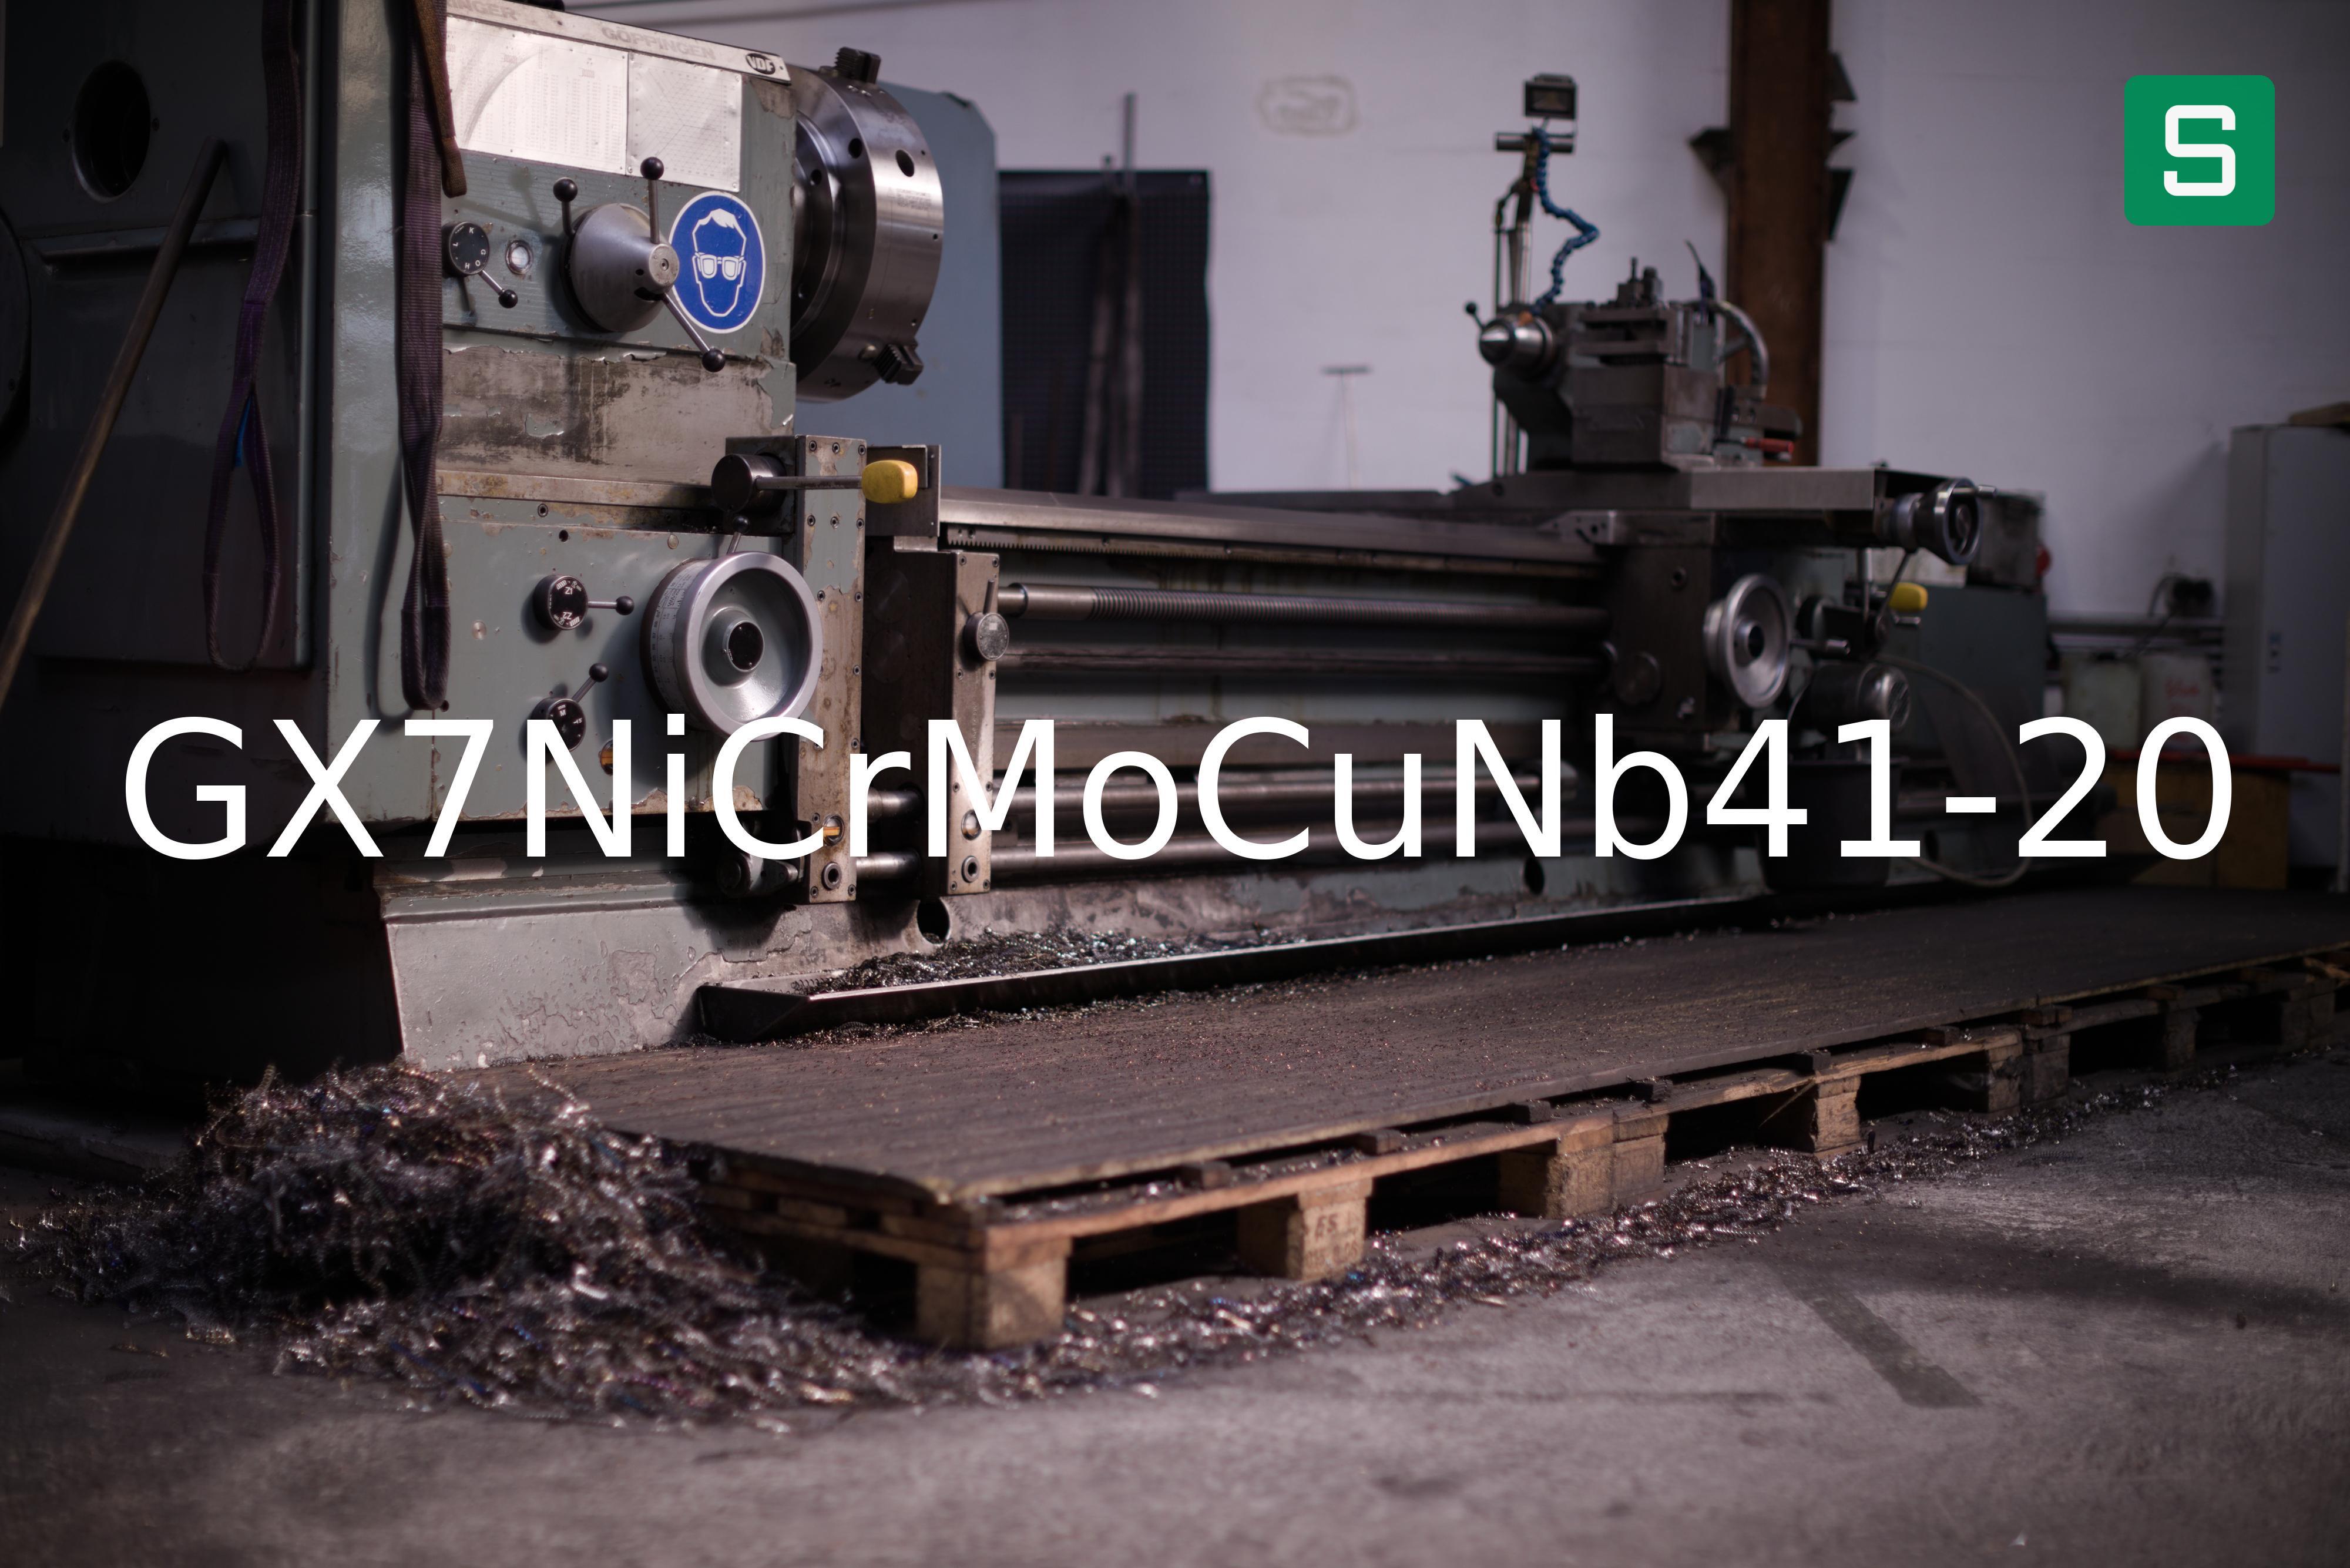 Stahlwerkstoff: GX7NiCrMoCuNb41-20